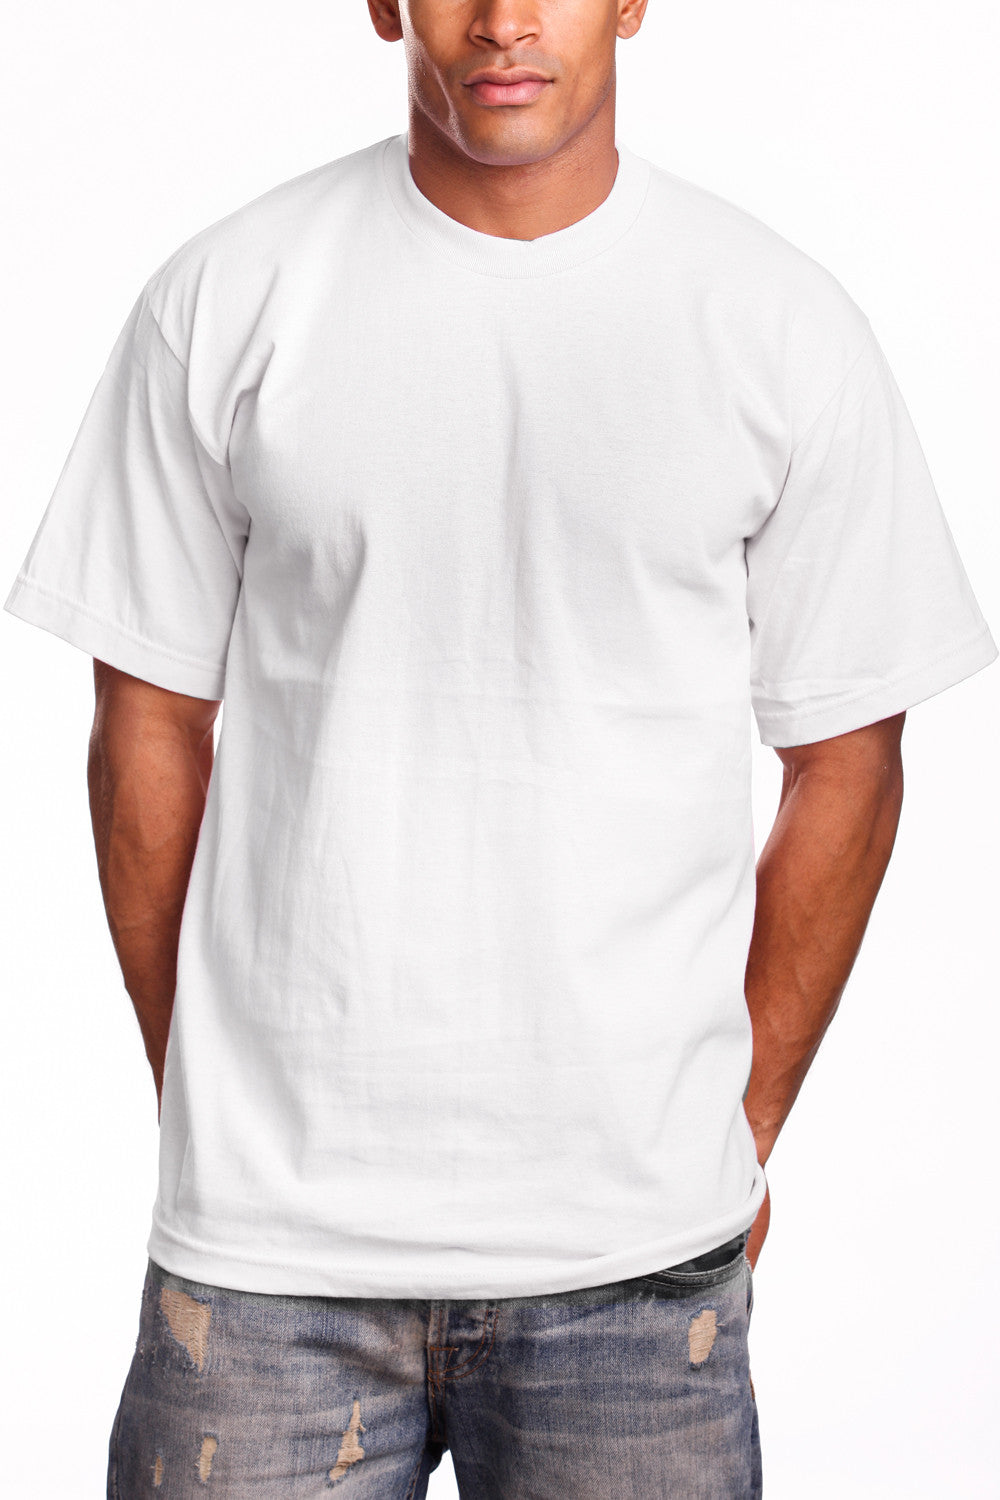 evenwicht verbanning Artistiek Athletic Fit T-Shirts – Pro 5 USA